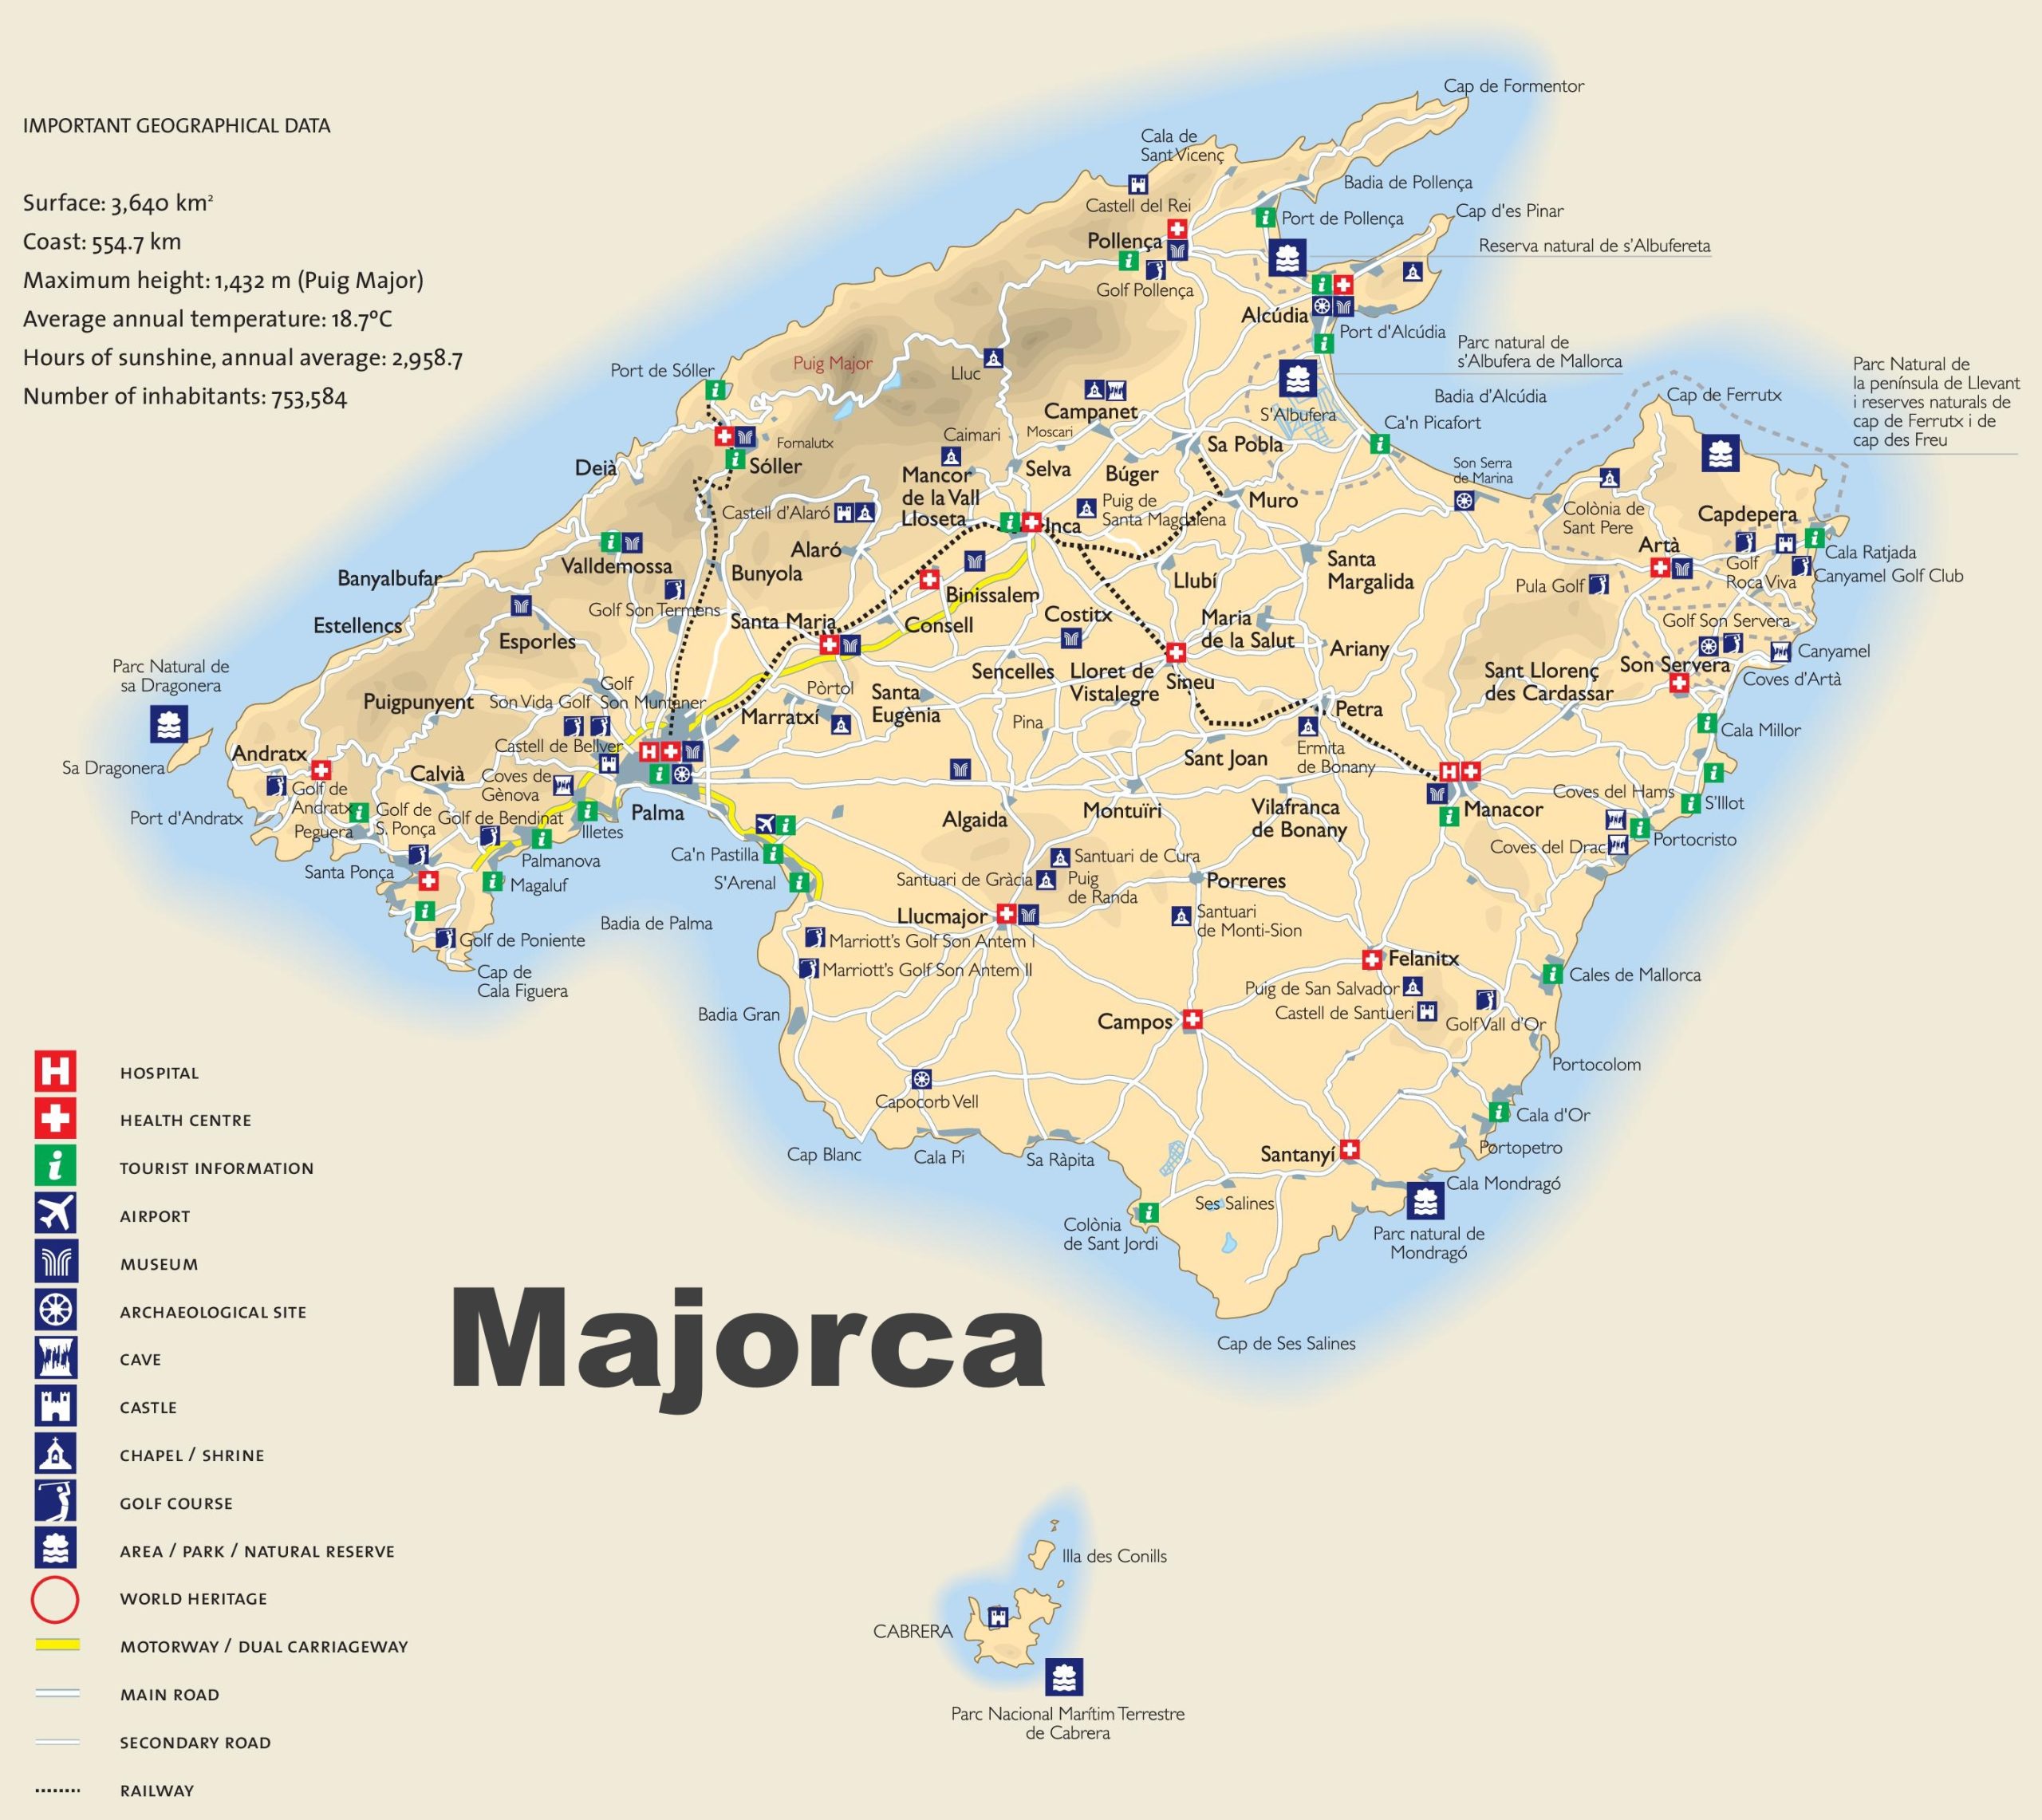 majorca tourism board